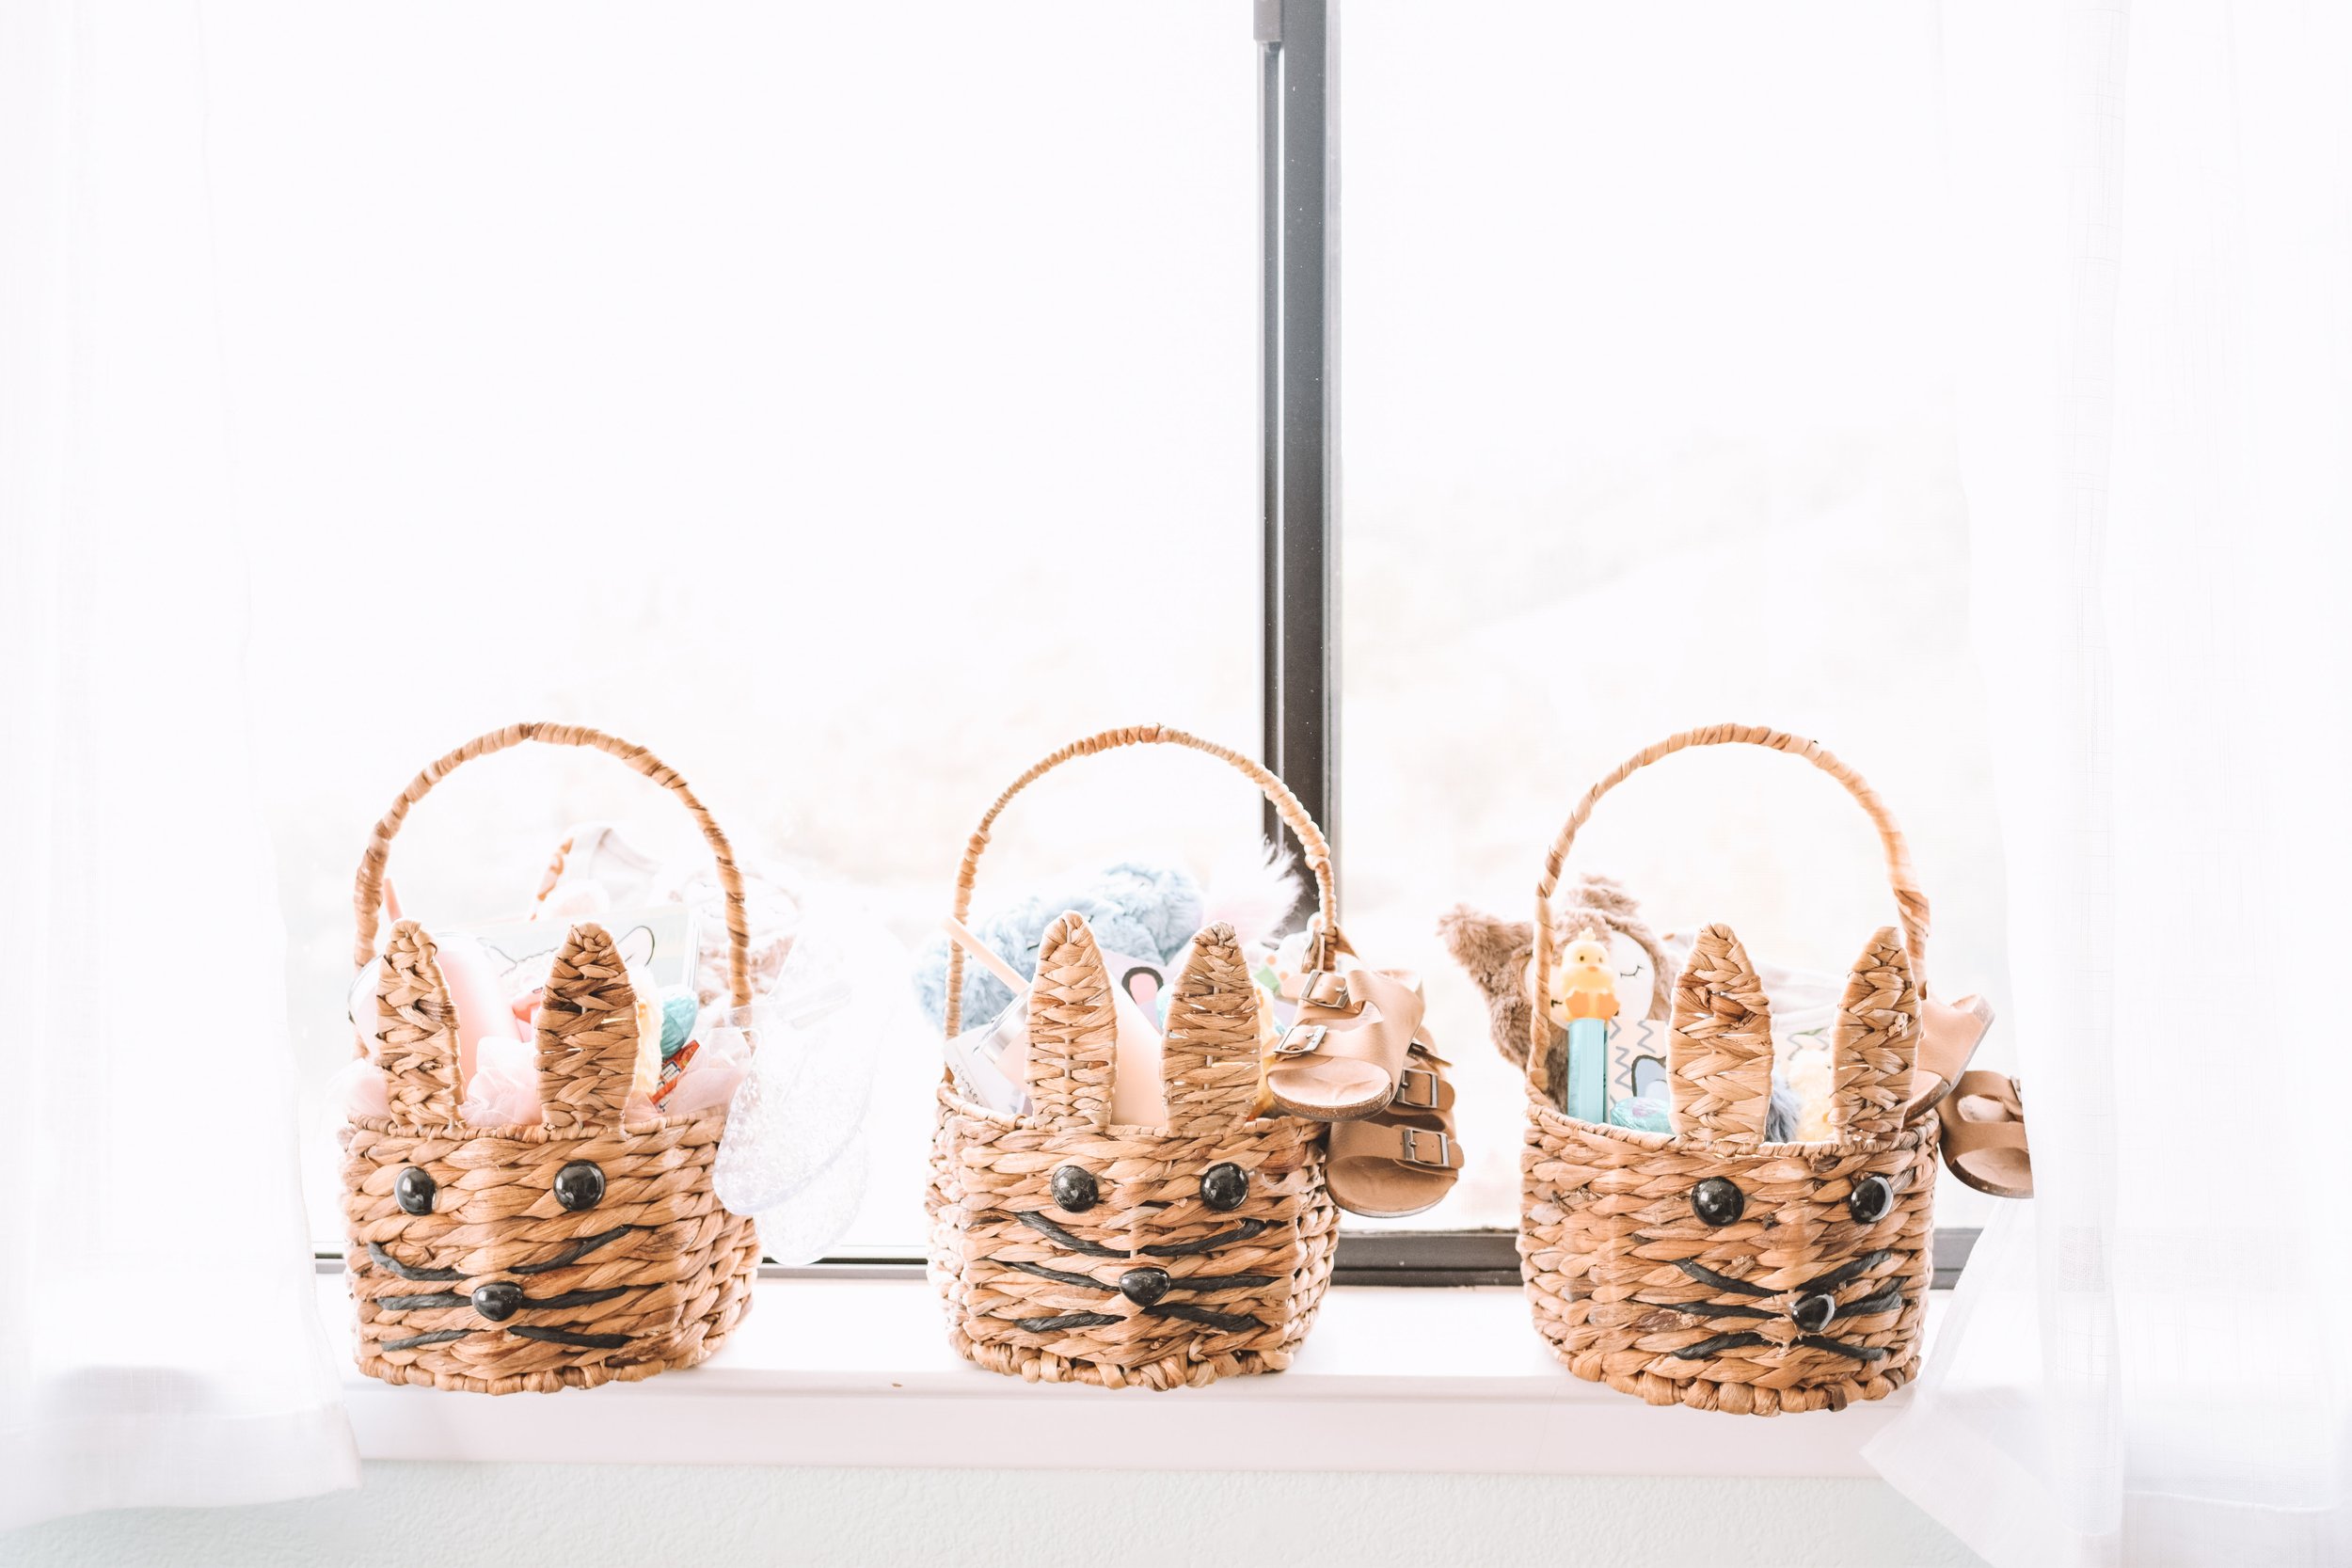 Kids Easter Basket Ideas